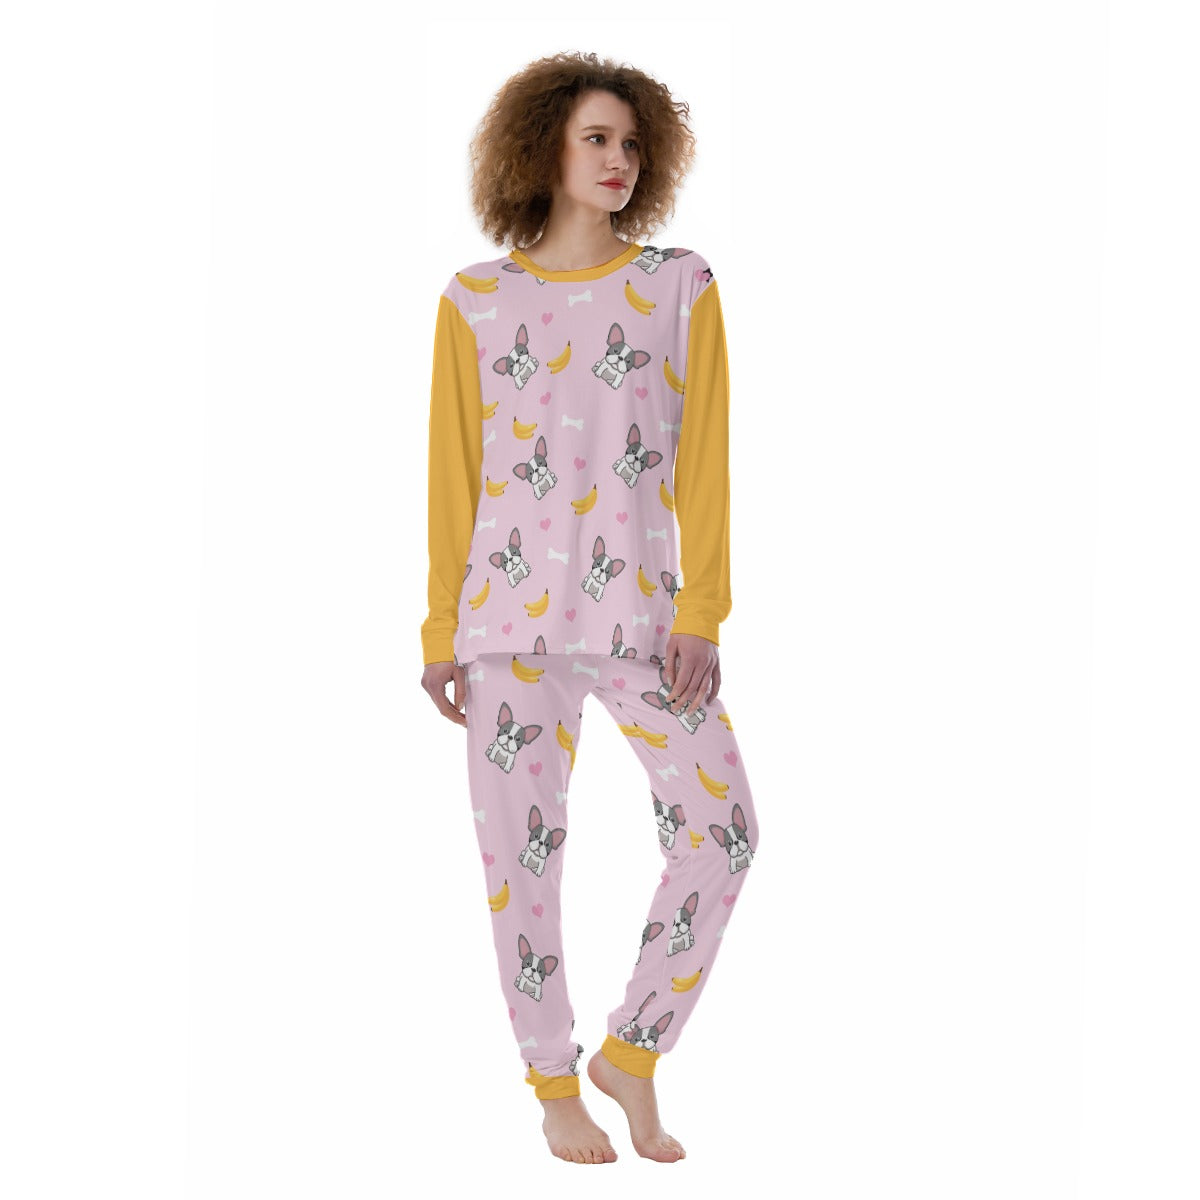 Clover - All-Over Print Women's Pajamas